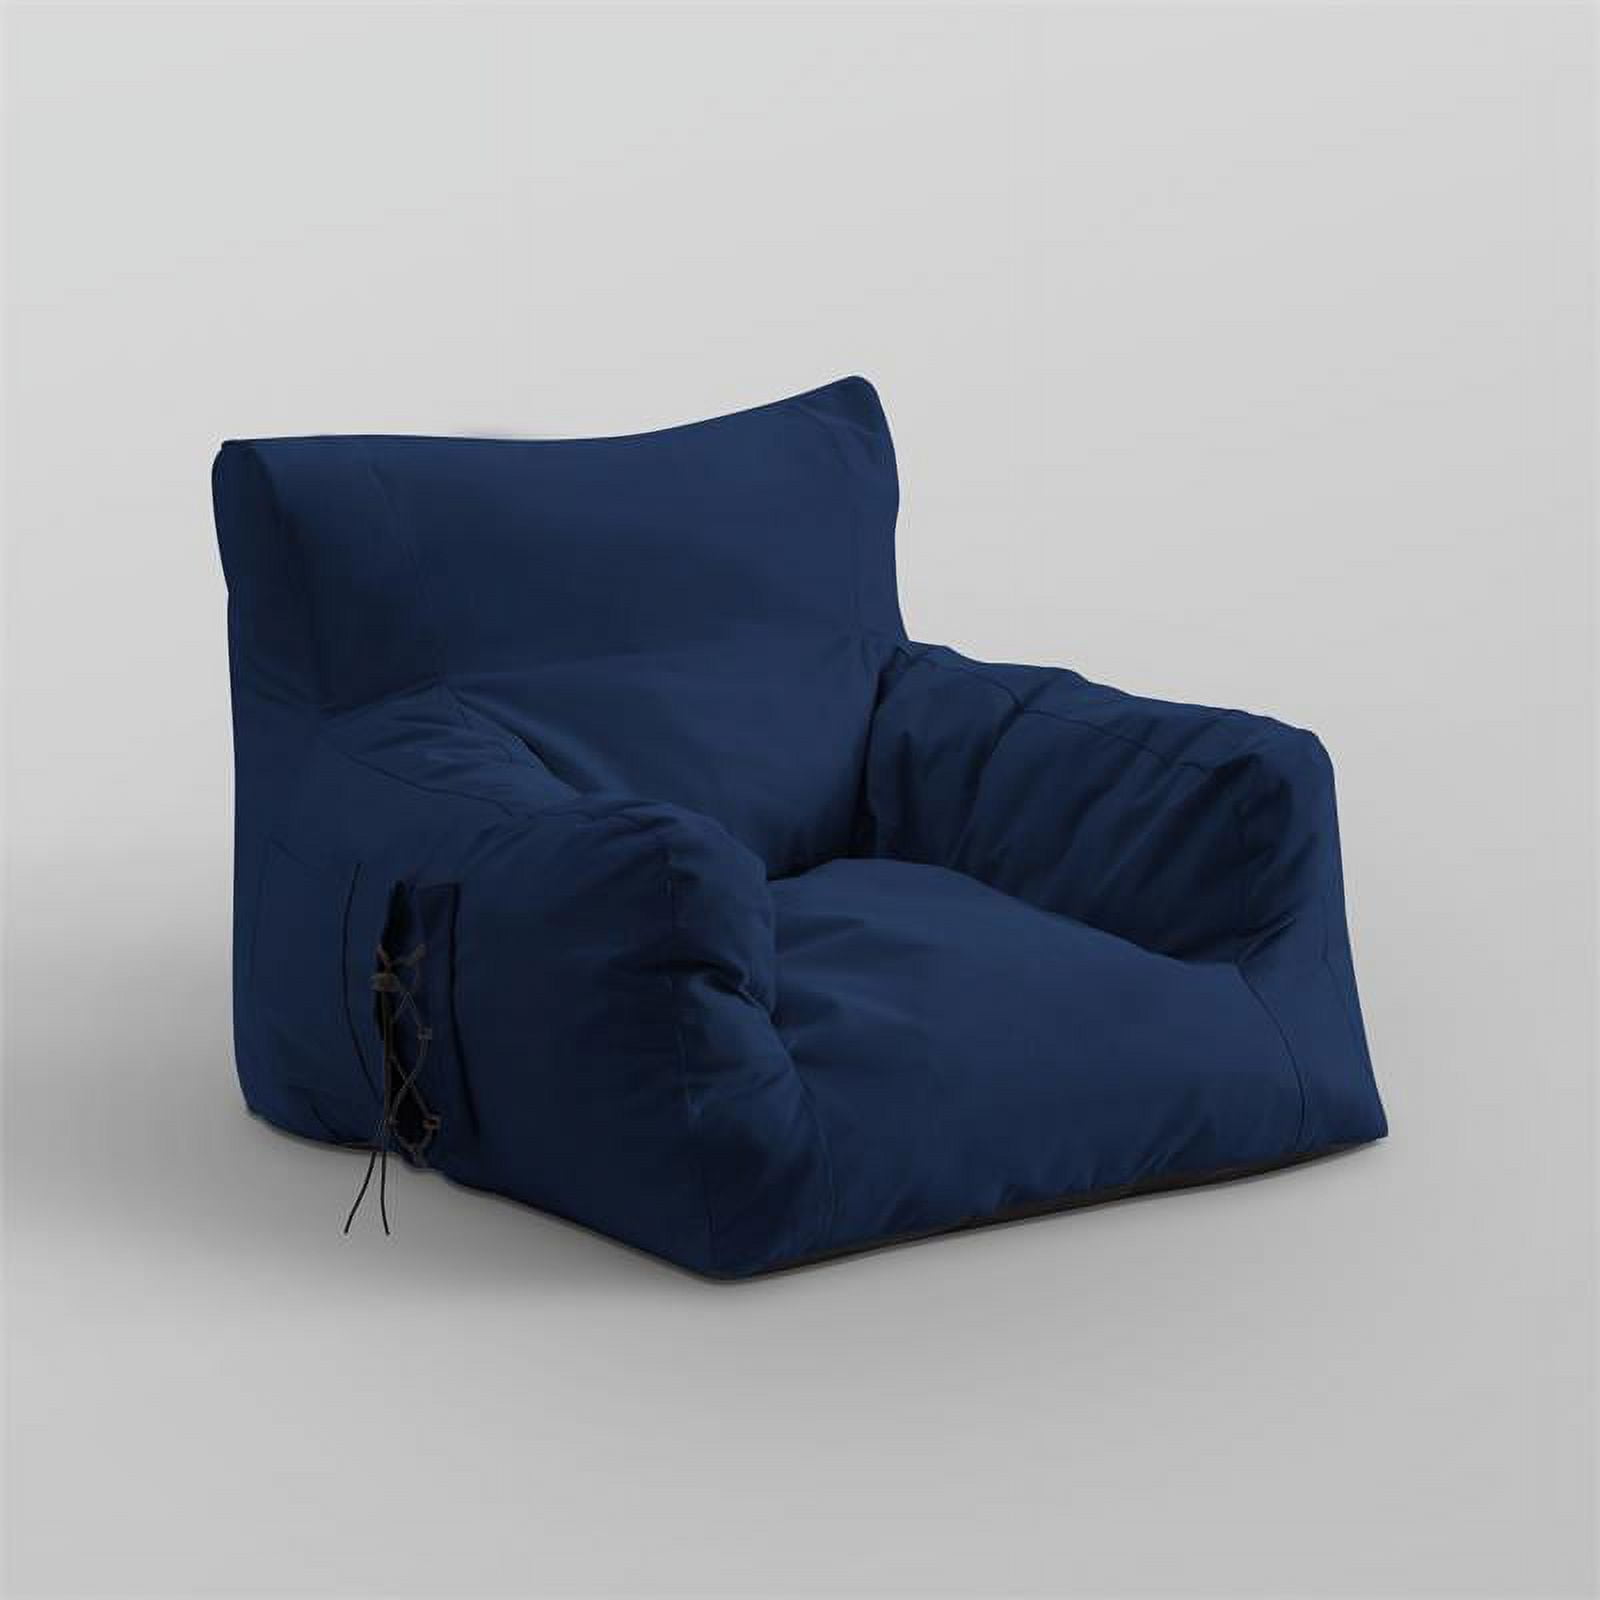 Gouchee Home Ava Navy 5ft Velvet Foam Bean Bag Chair - ShopStyle